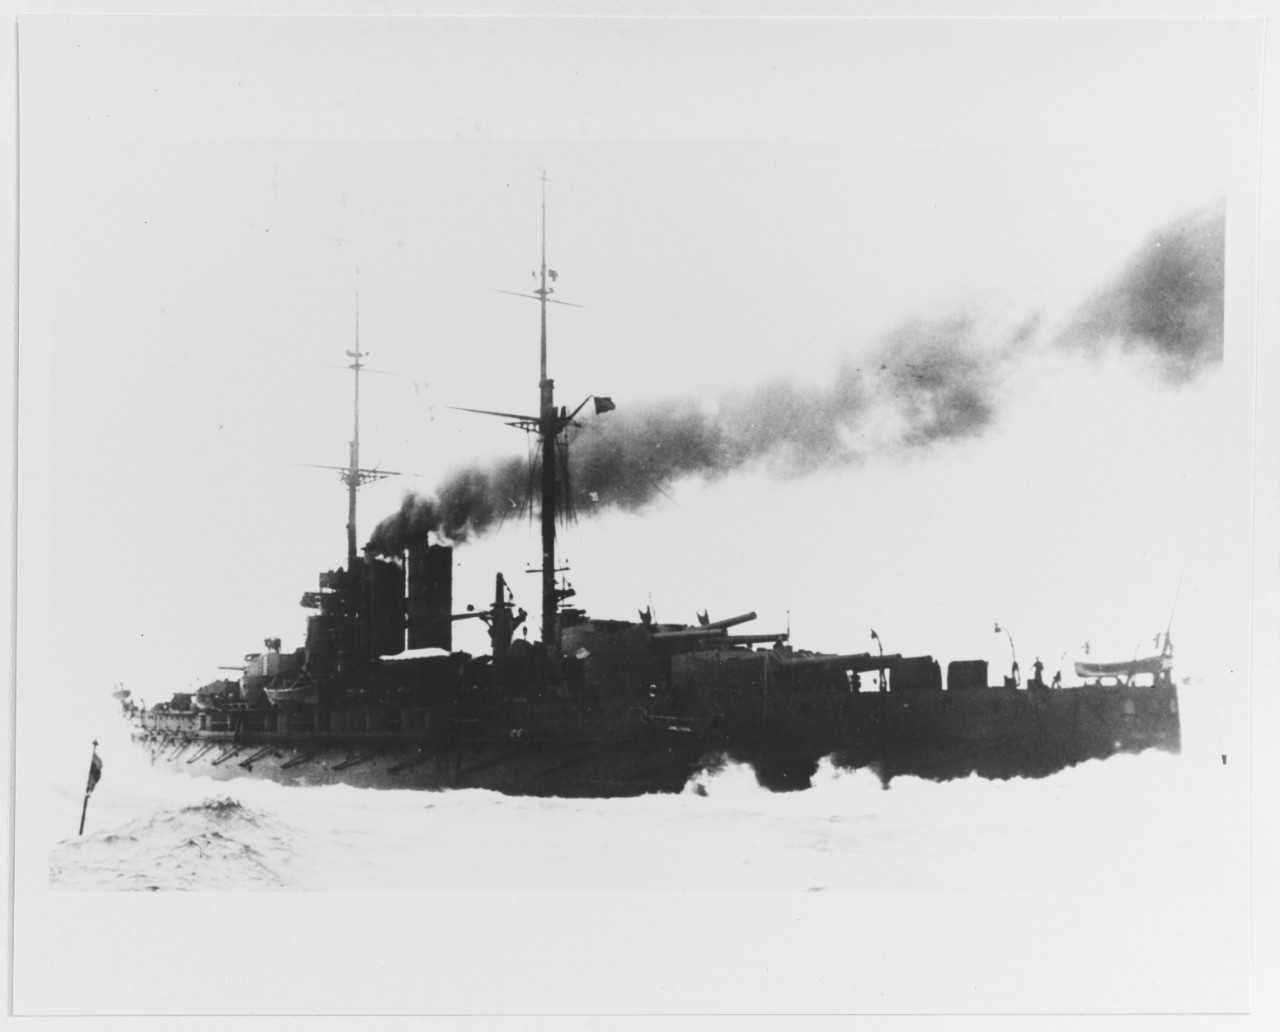 TEGETTHOFF (Austrian battleship, 1912-1920)